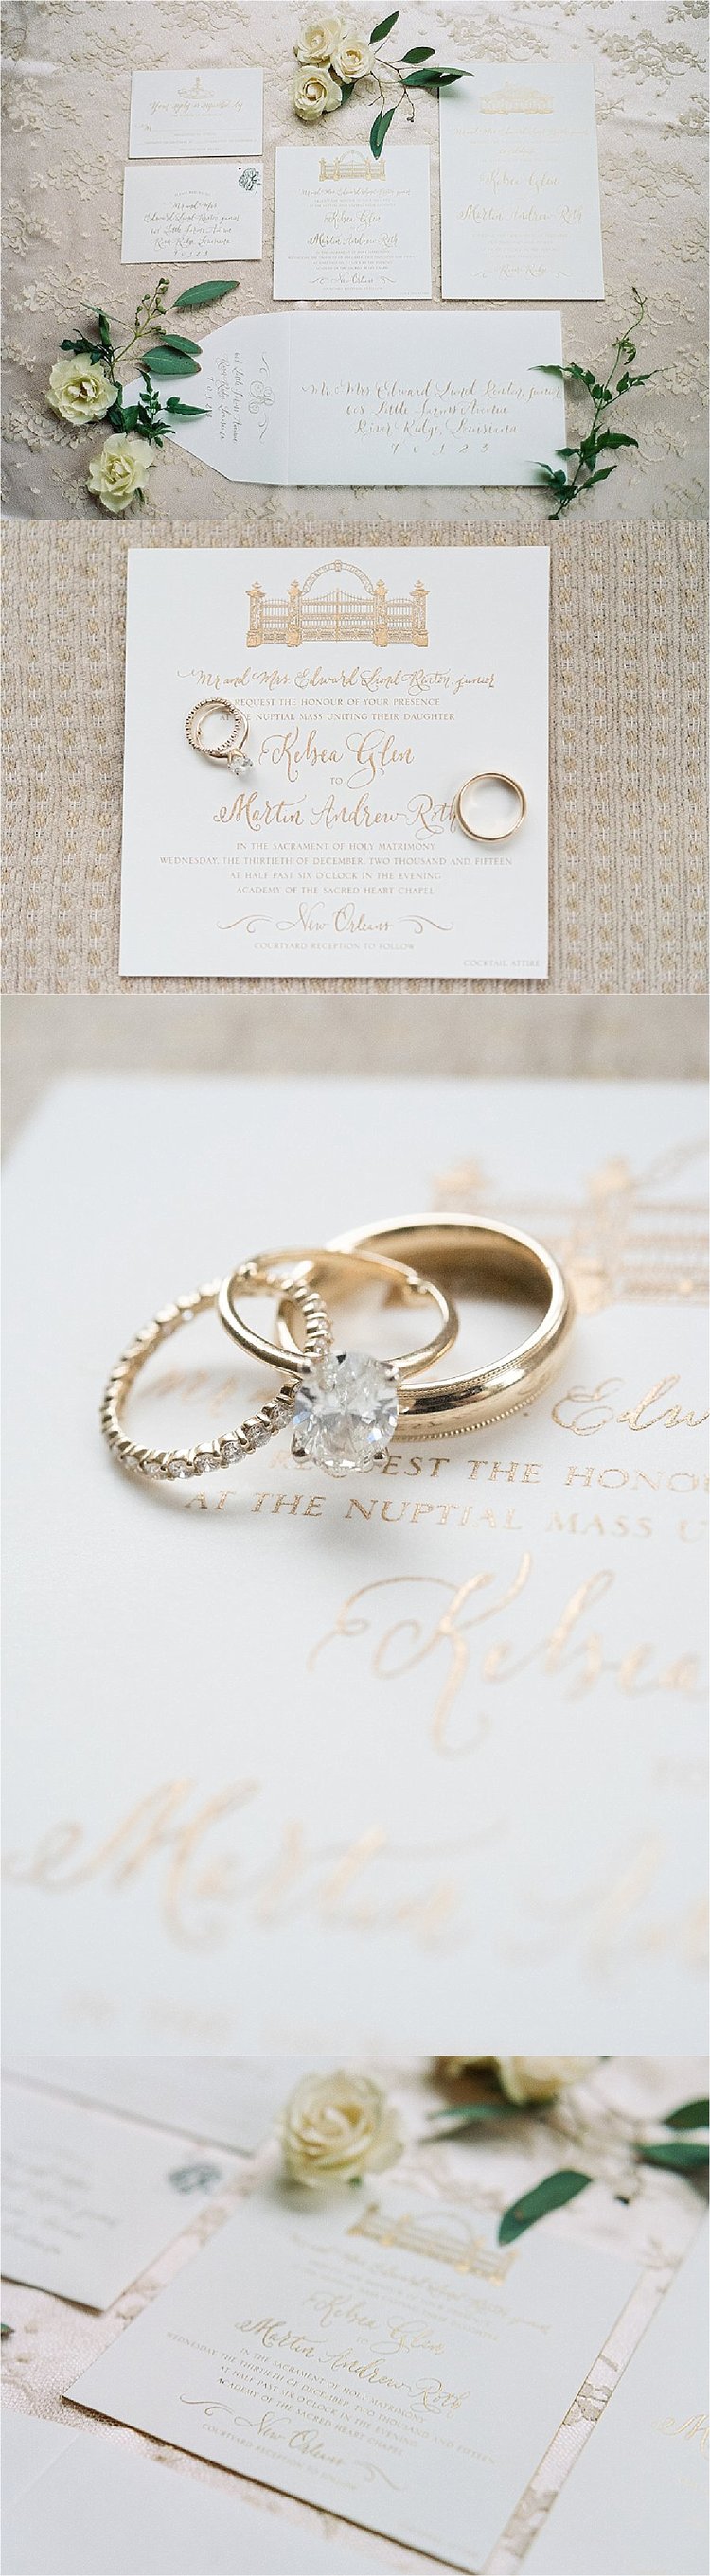 beautiful white and gold wedding invitation suite and gold wedding band with engagement rings 